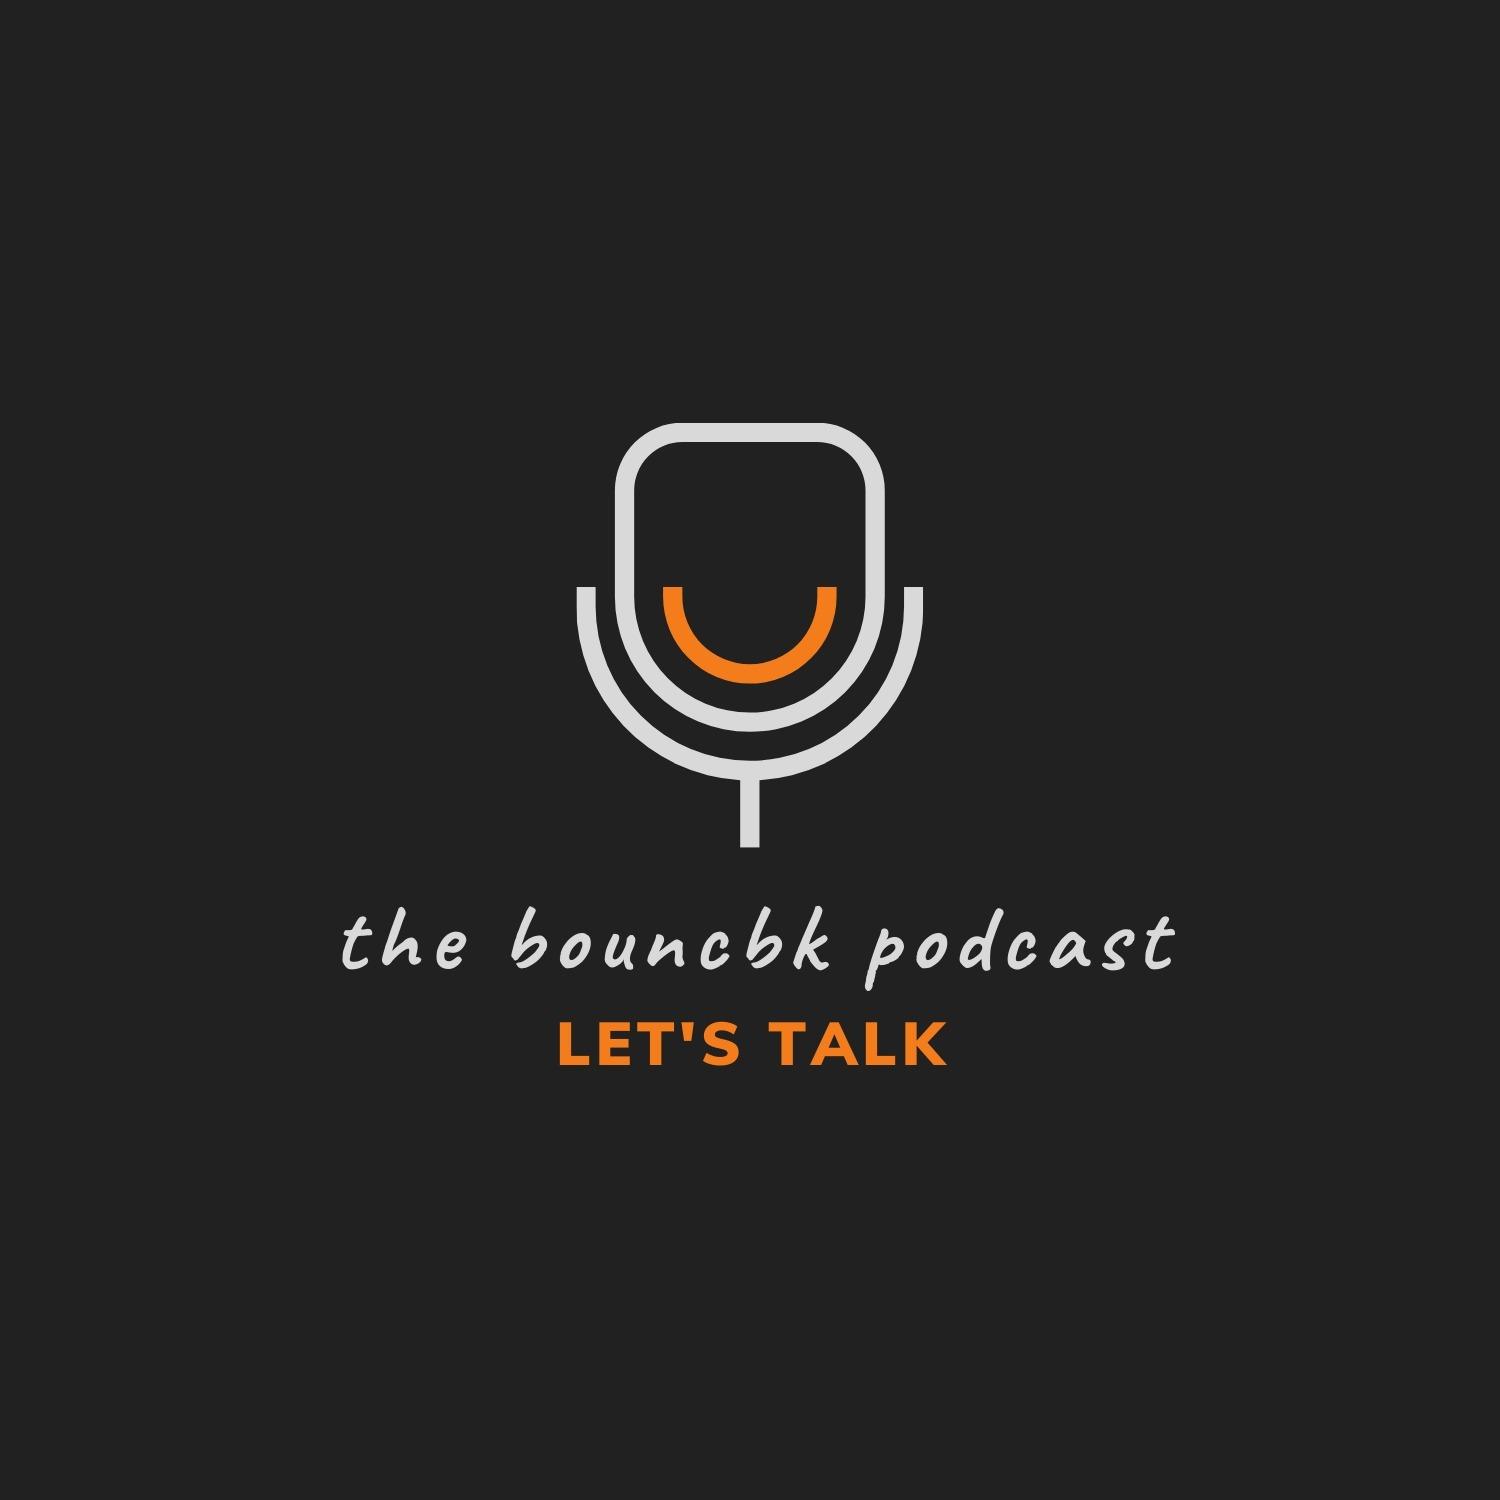 The Bouncbk Podcast